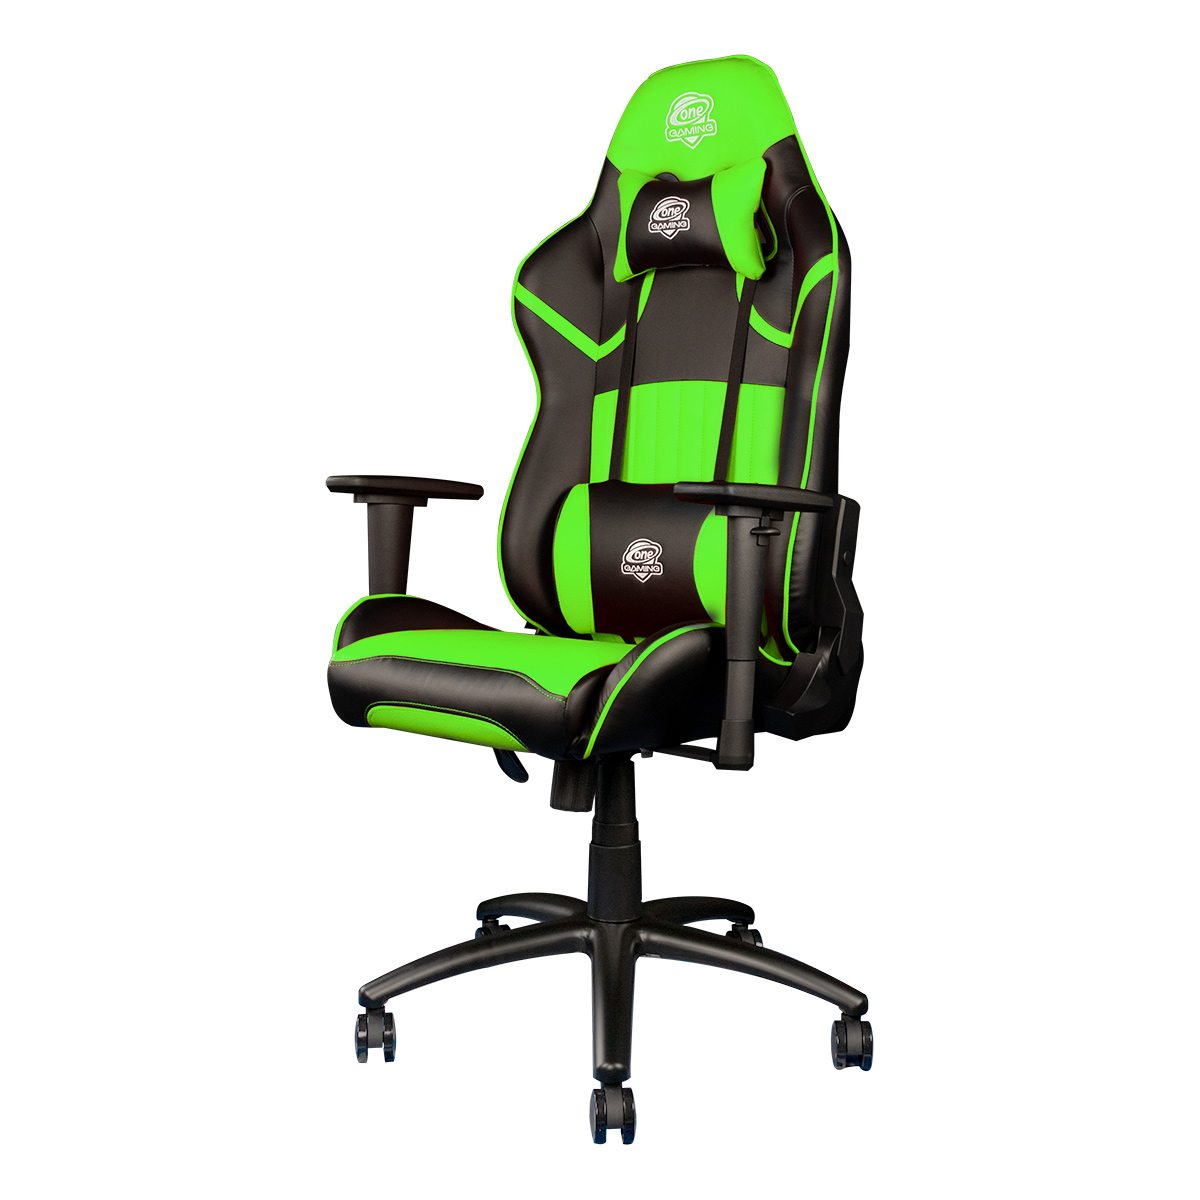 ONE GAMING Chair Pro grün schwarz - Gaming Stuhl, Green